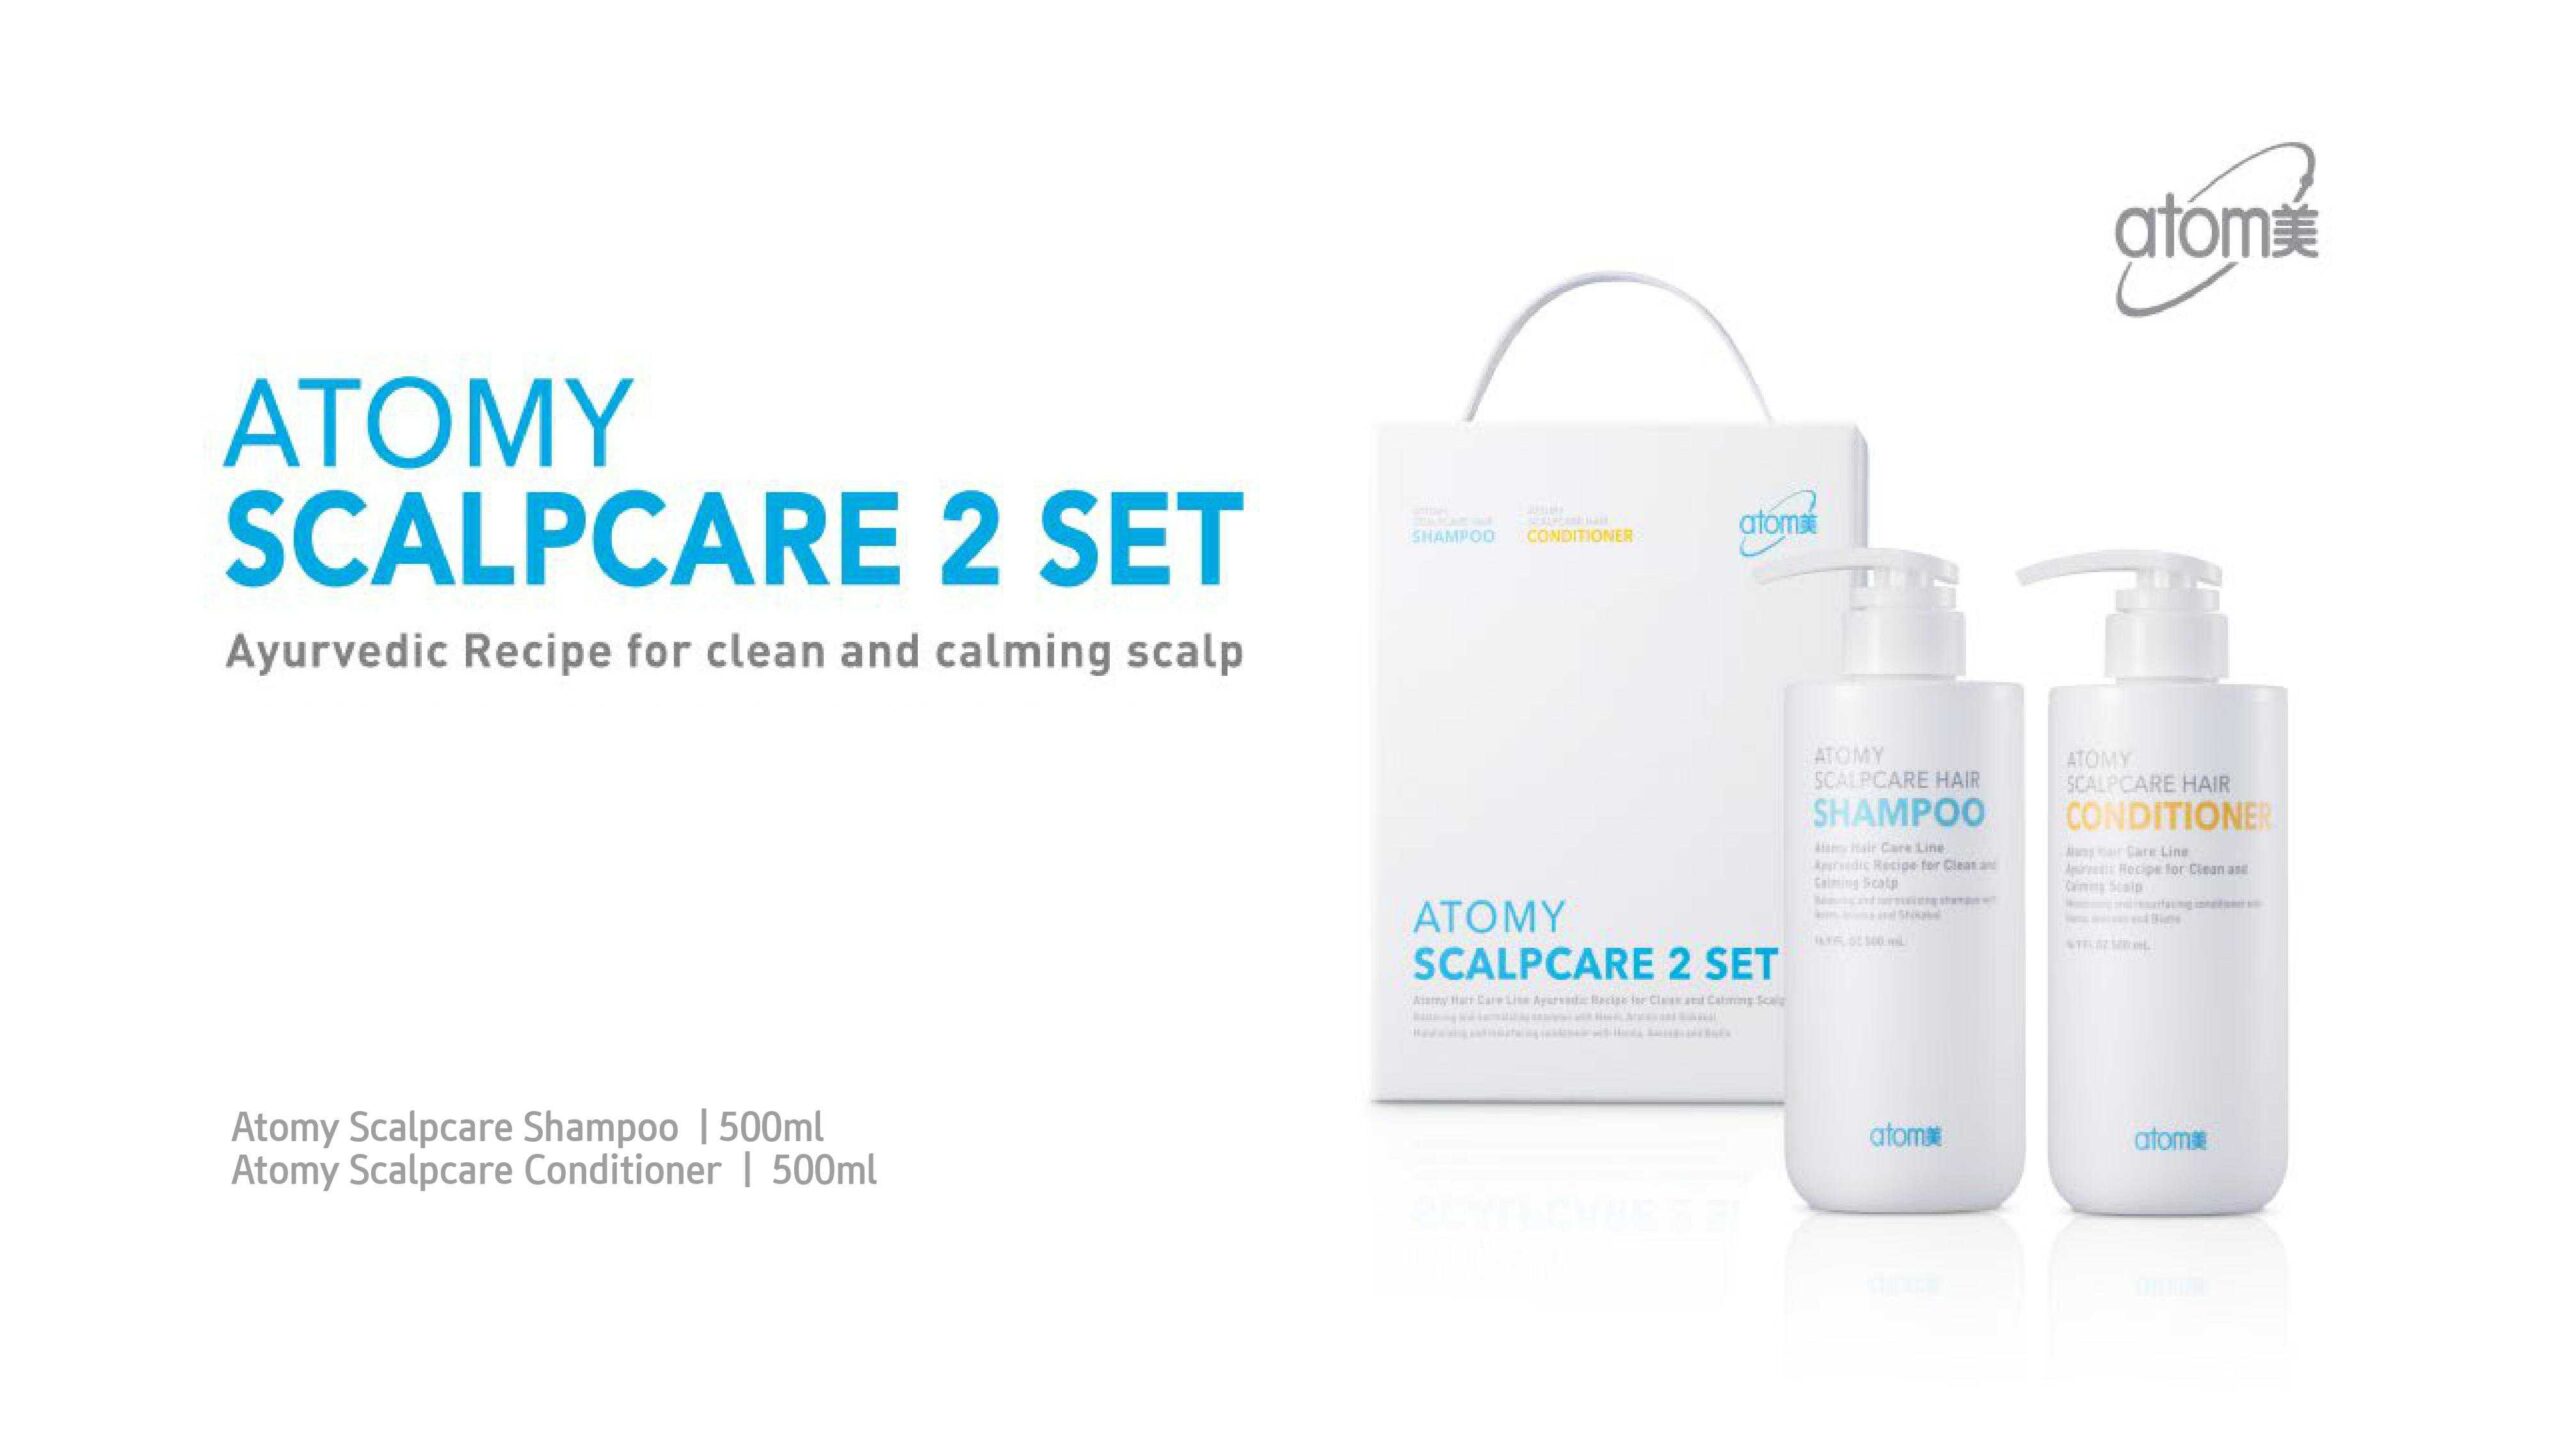 ATOMY Scalp Care 2 Set